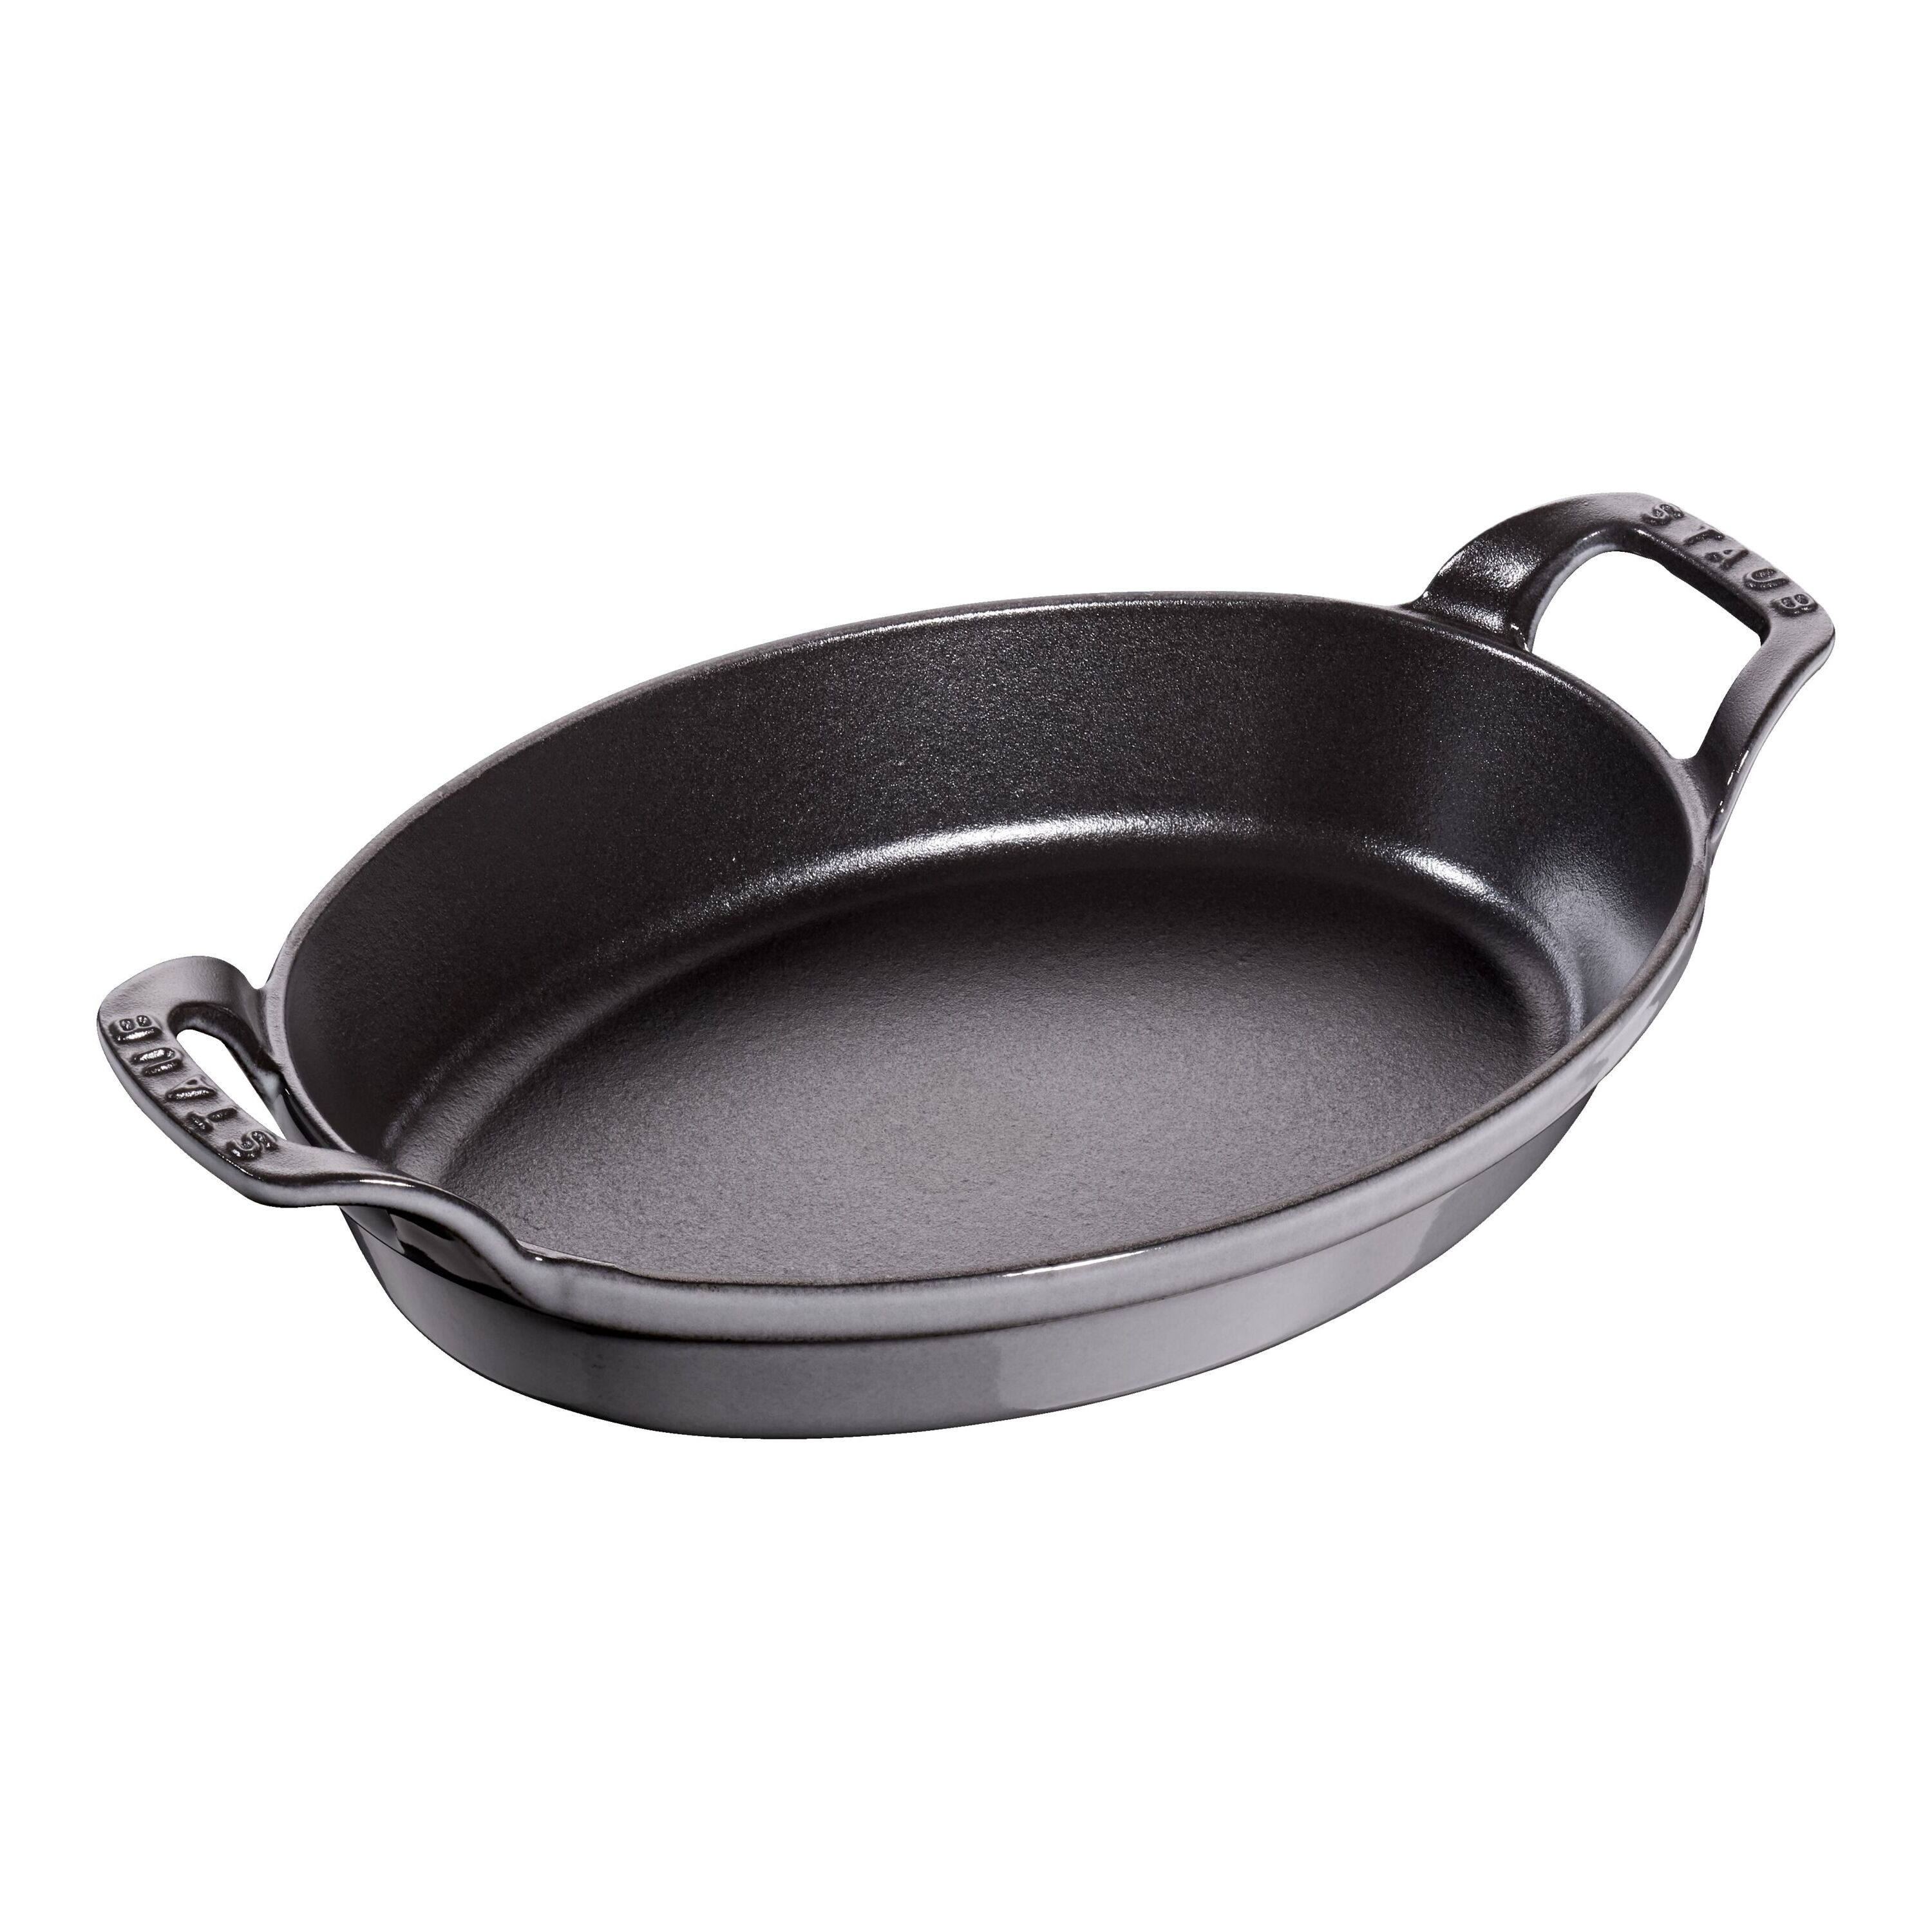 Staub Cast Iron 9.5-inch x 6.75-inch Oval Baking Dish - Graphite